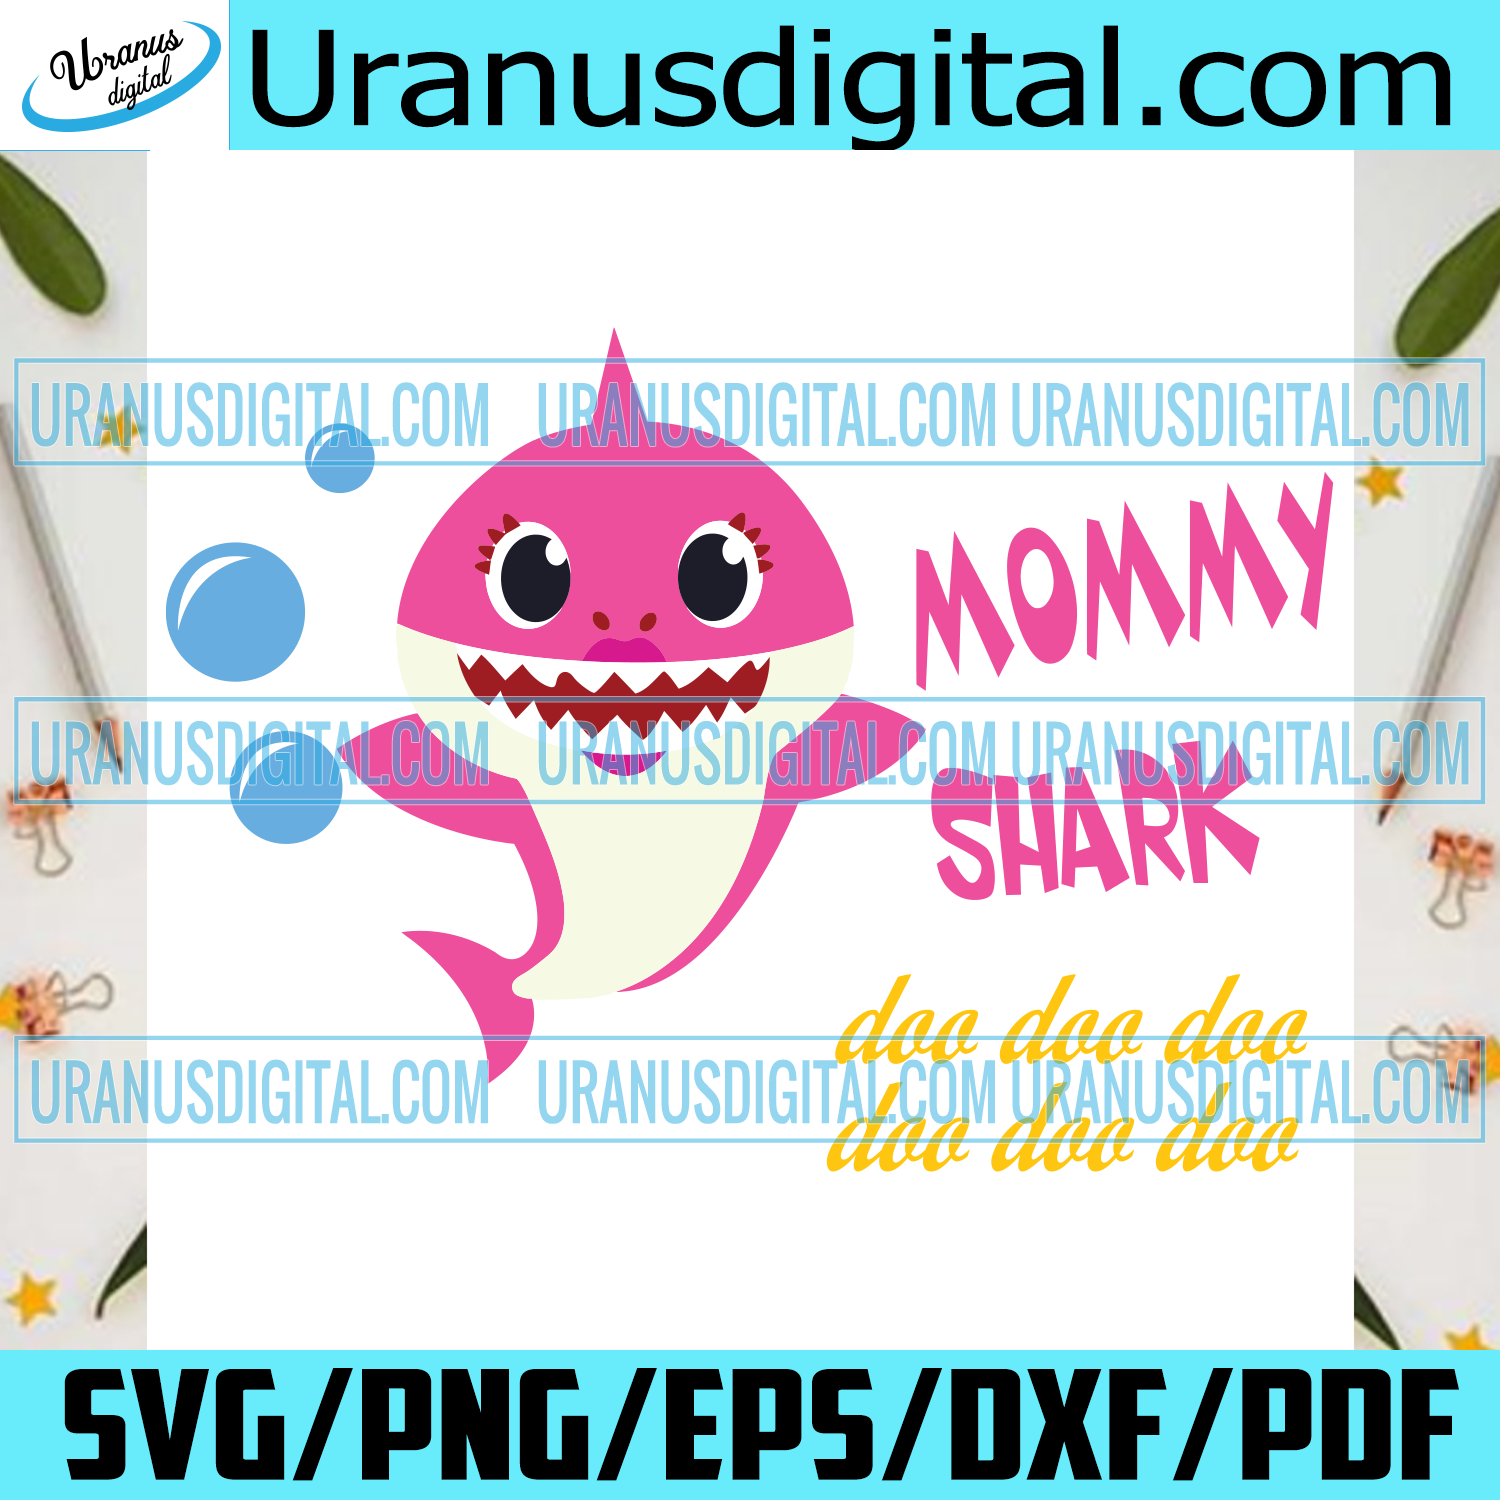 Free Free 291 Mommy Shark Doo Doo Doo Svg SVG PNG EPS DXF File